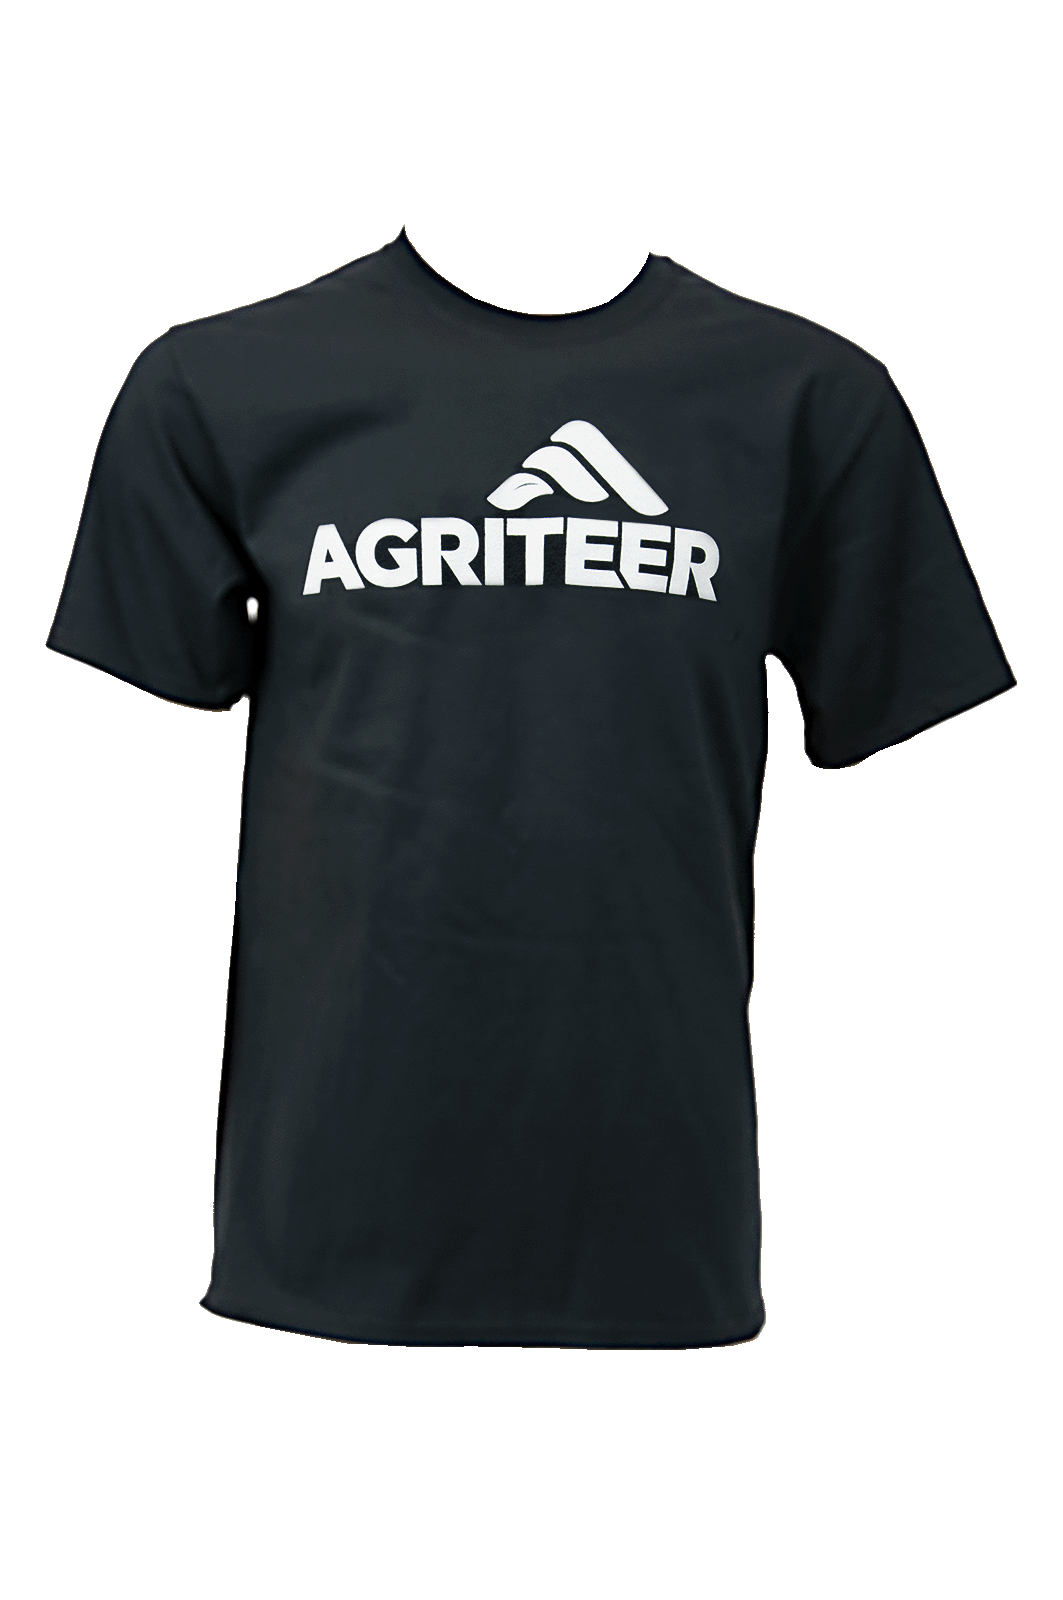 Agriteer Black Shirt